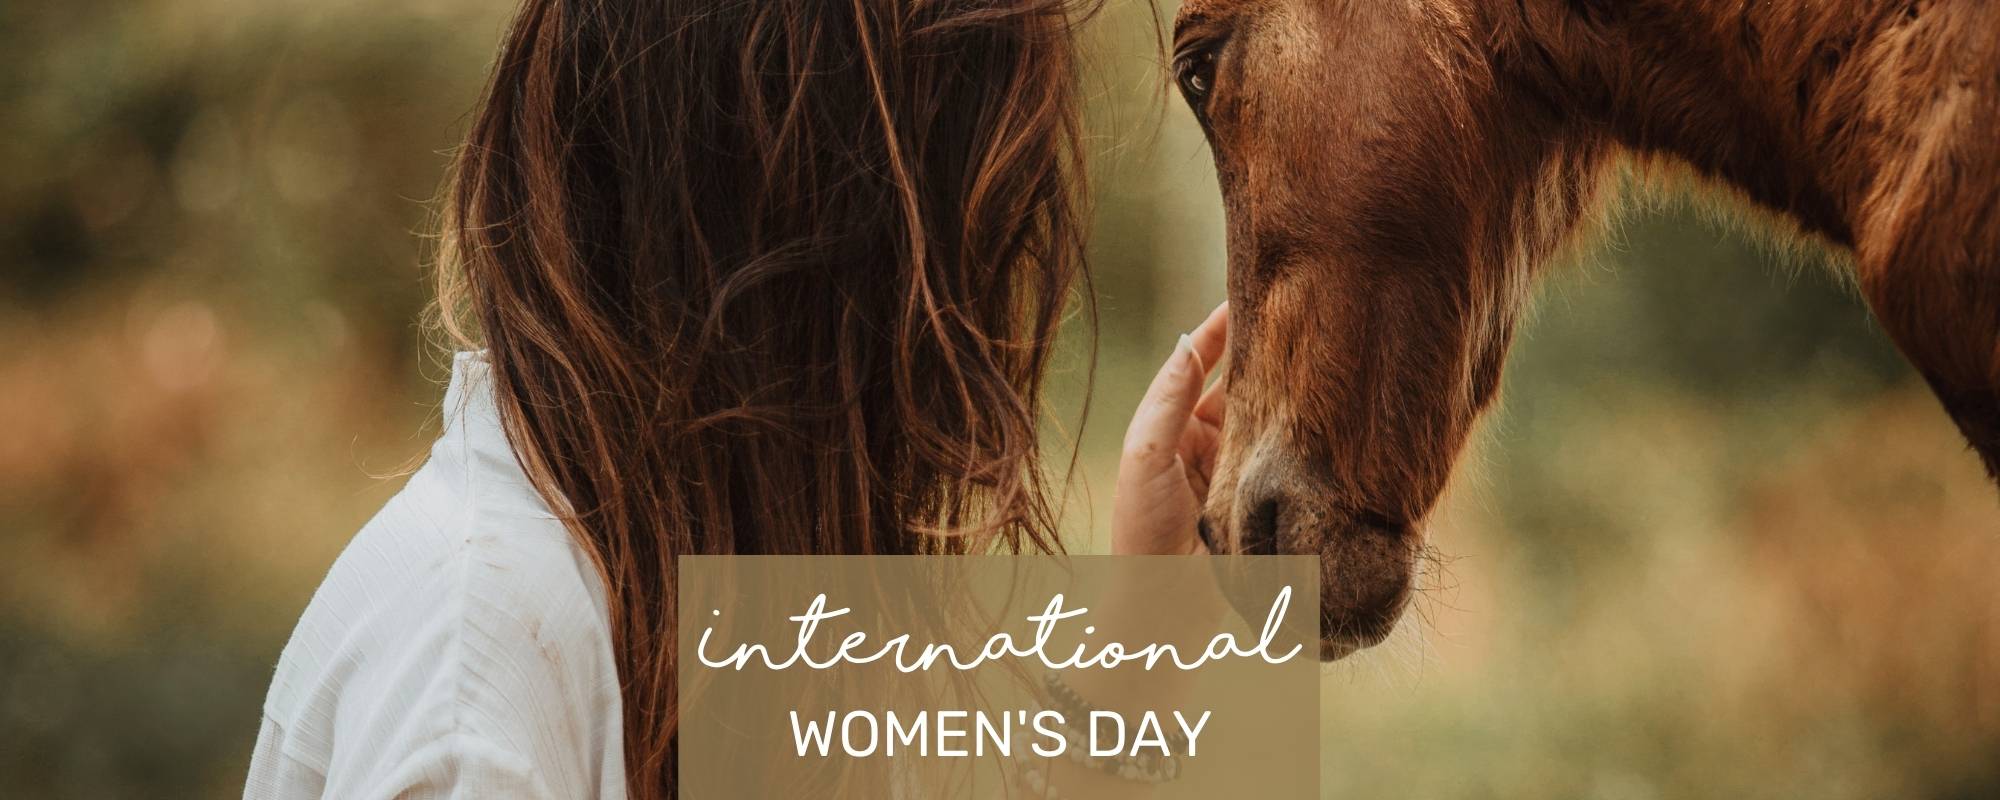 Celebrating women in wildlife conservation on International Women’s Day